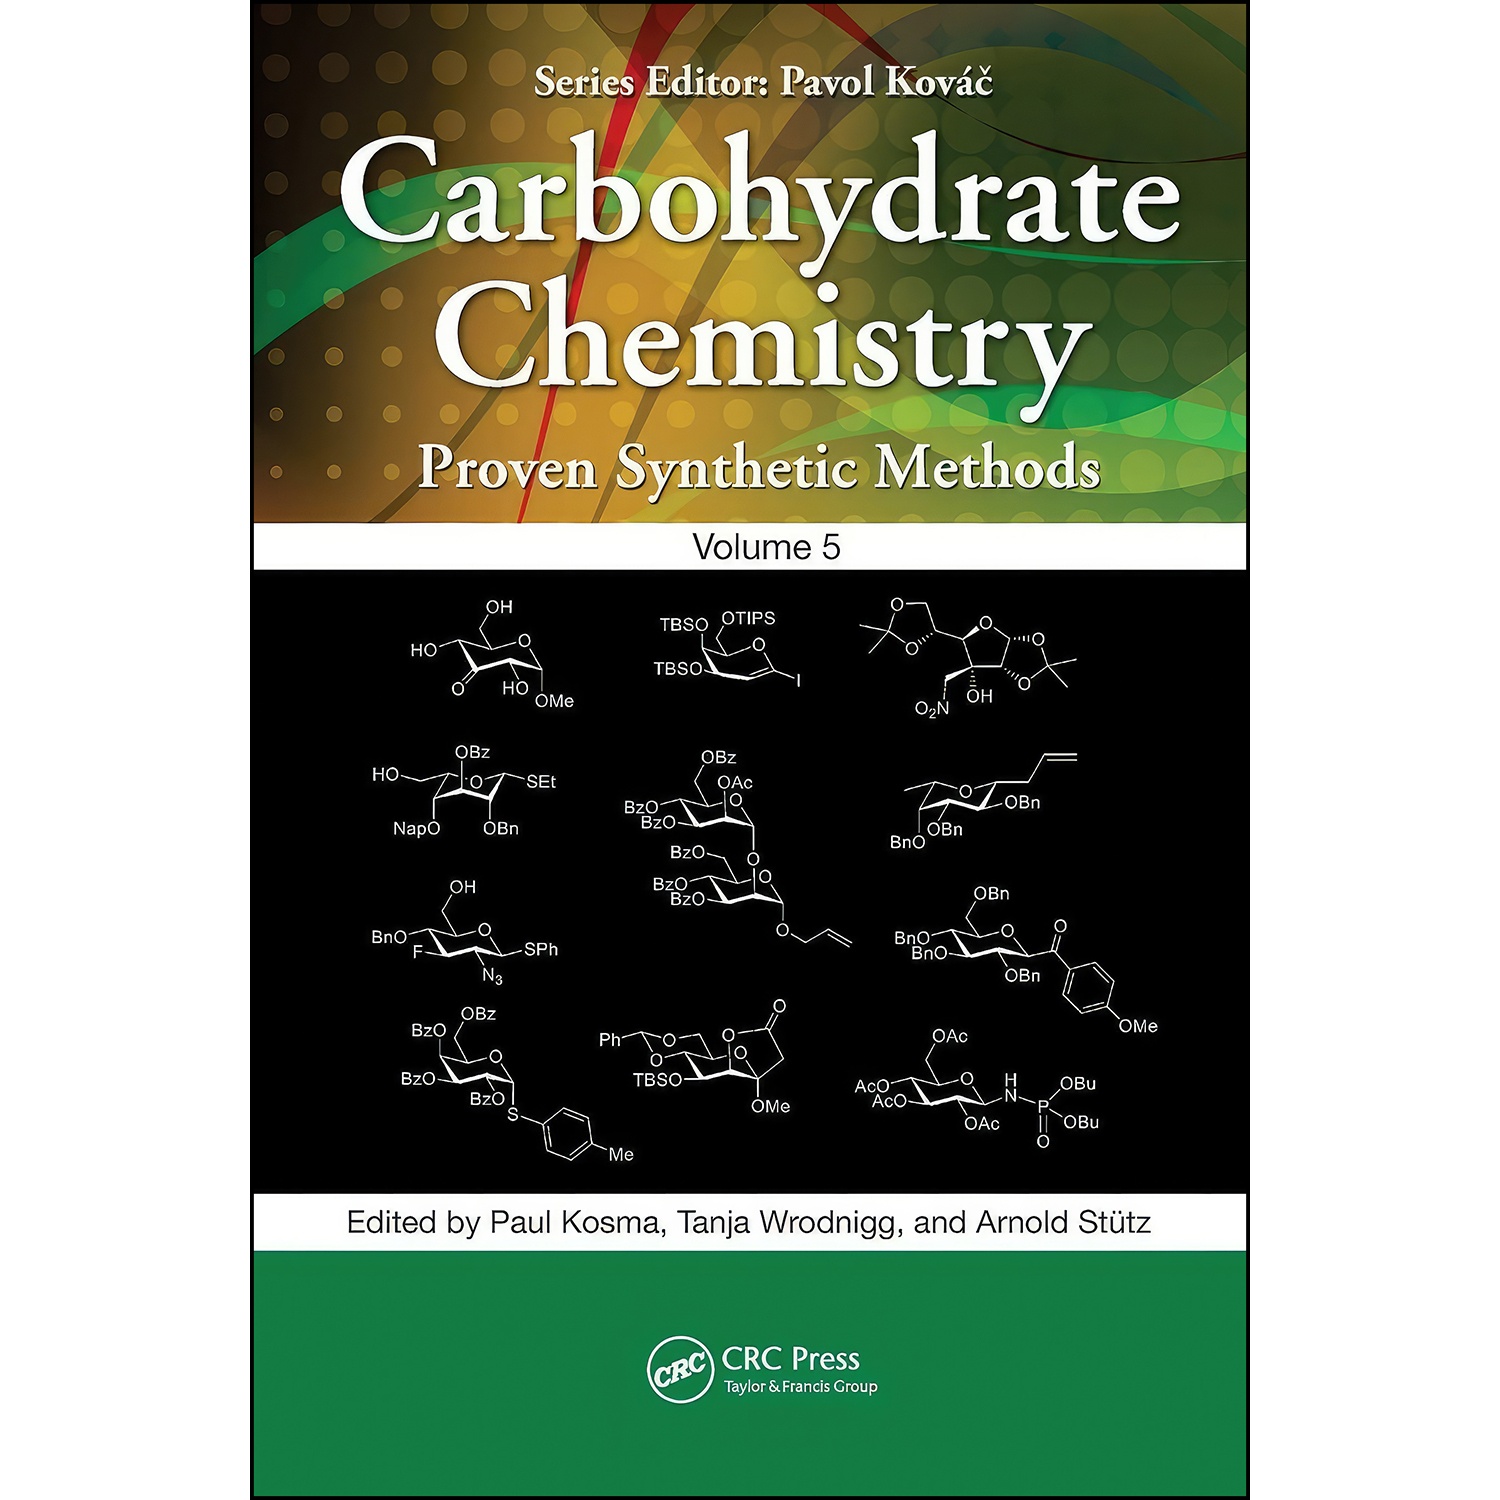 کتاب Carbohydrate Chemistry اثر جمعي از نويسندگان انتشارات CRC Press